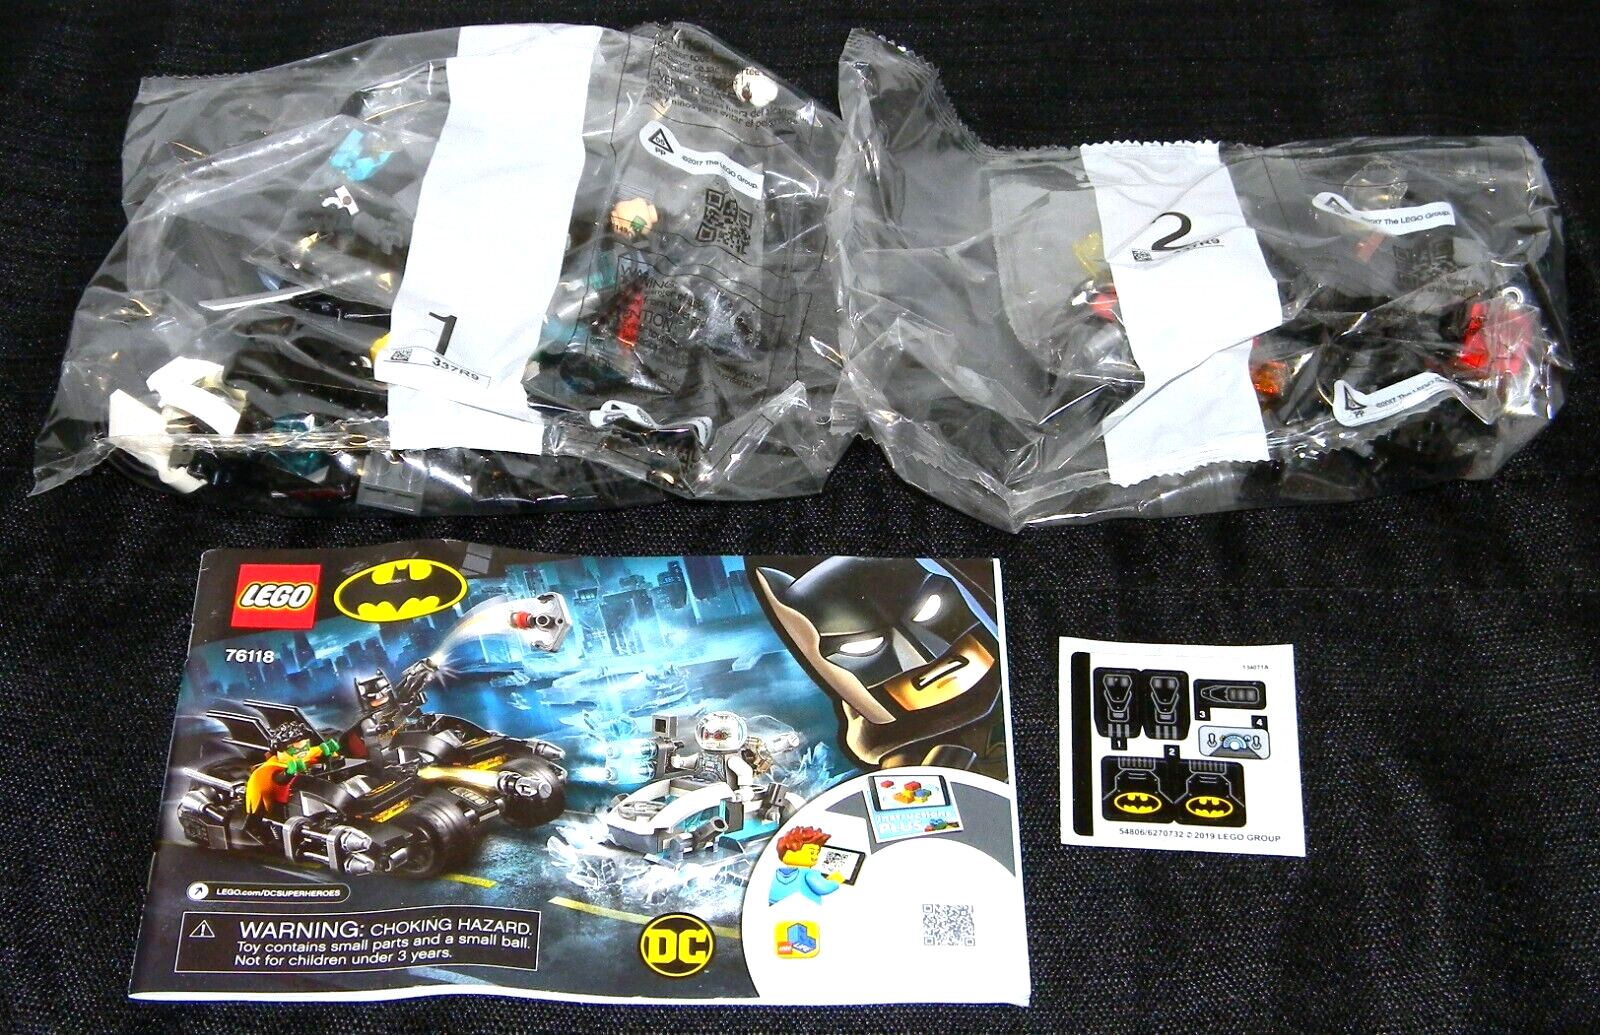 NEW! LEGO CITY 76118 MR. FREEZE BATCYCLE BATTLE / BATMAN / ROBIN (NO BOX)